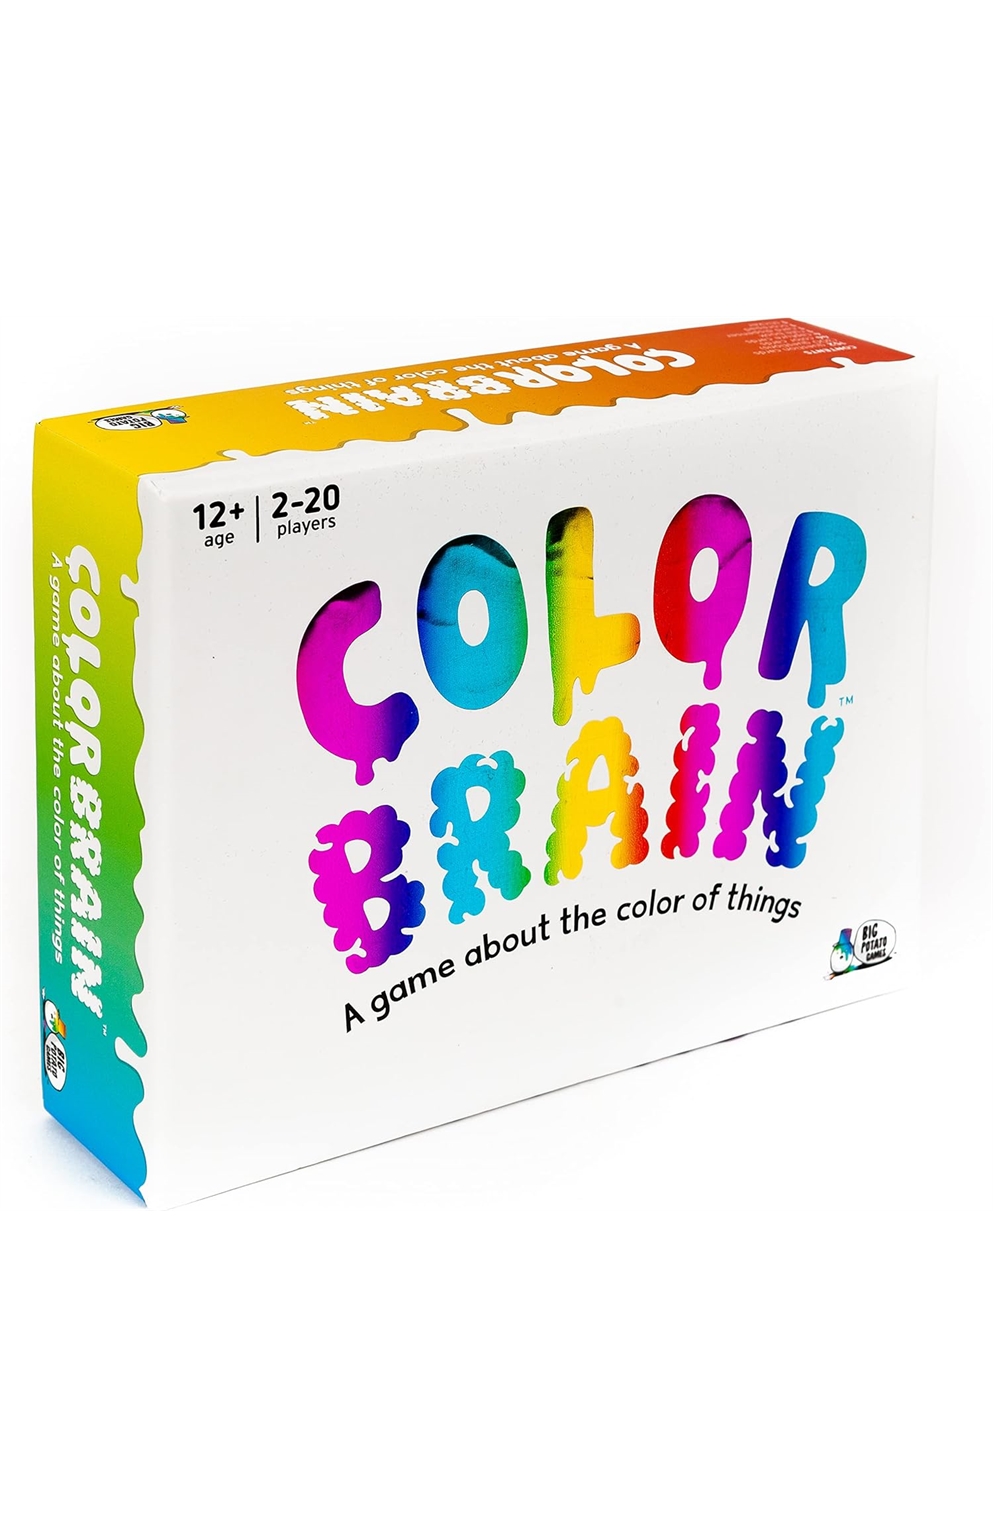 Colorbrain: Ultimate Family Board Game